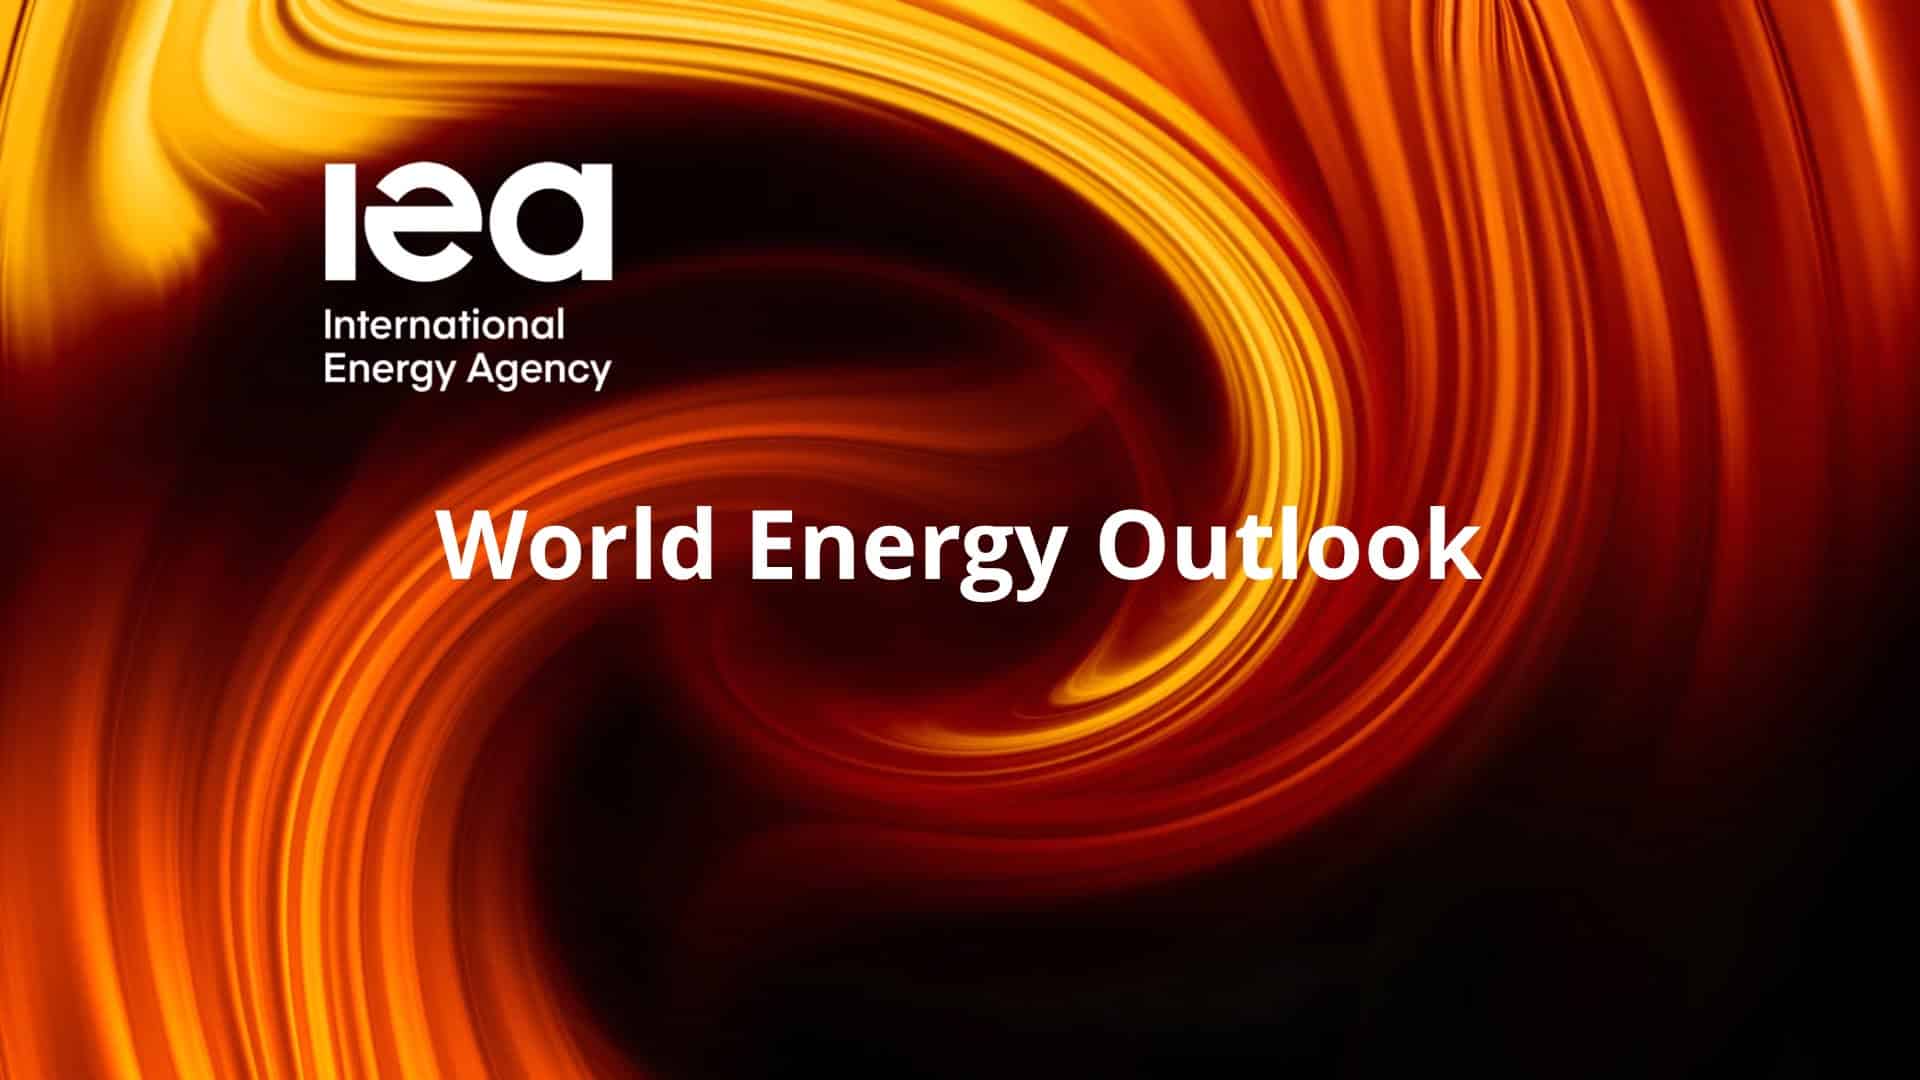 thefuture, Resurs, IEA, World Energy Outlook